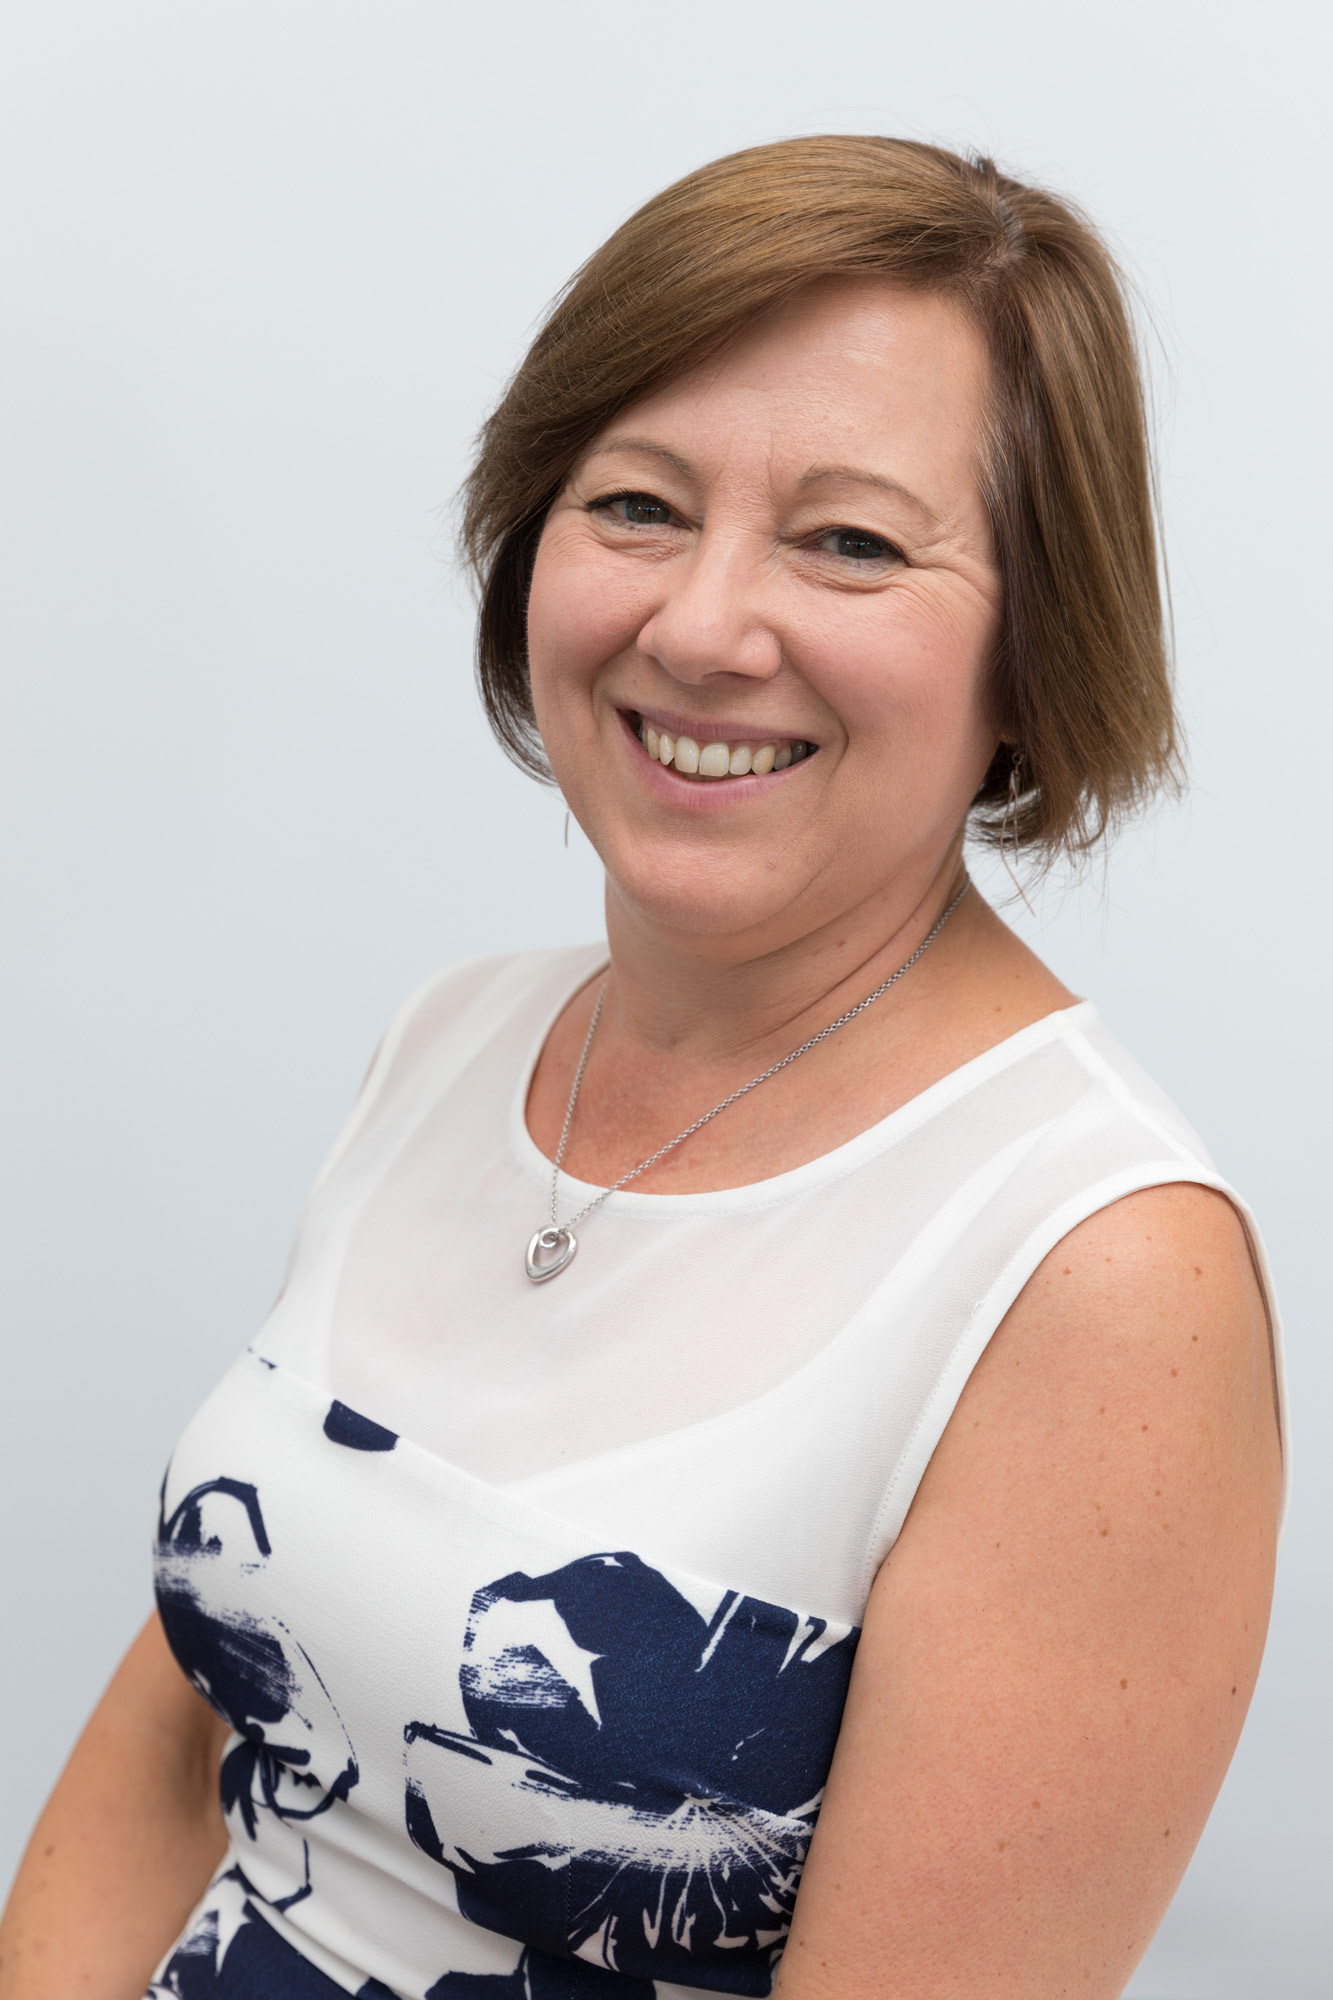 A business woman's corporate headshot photo taken in Croydon, London